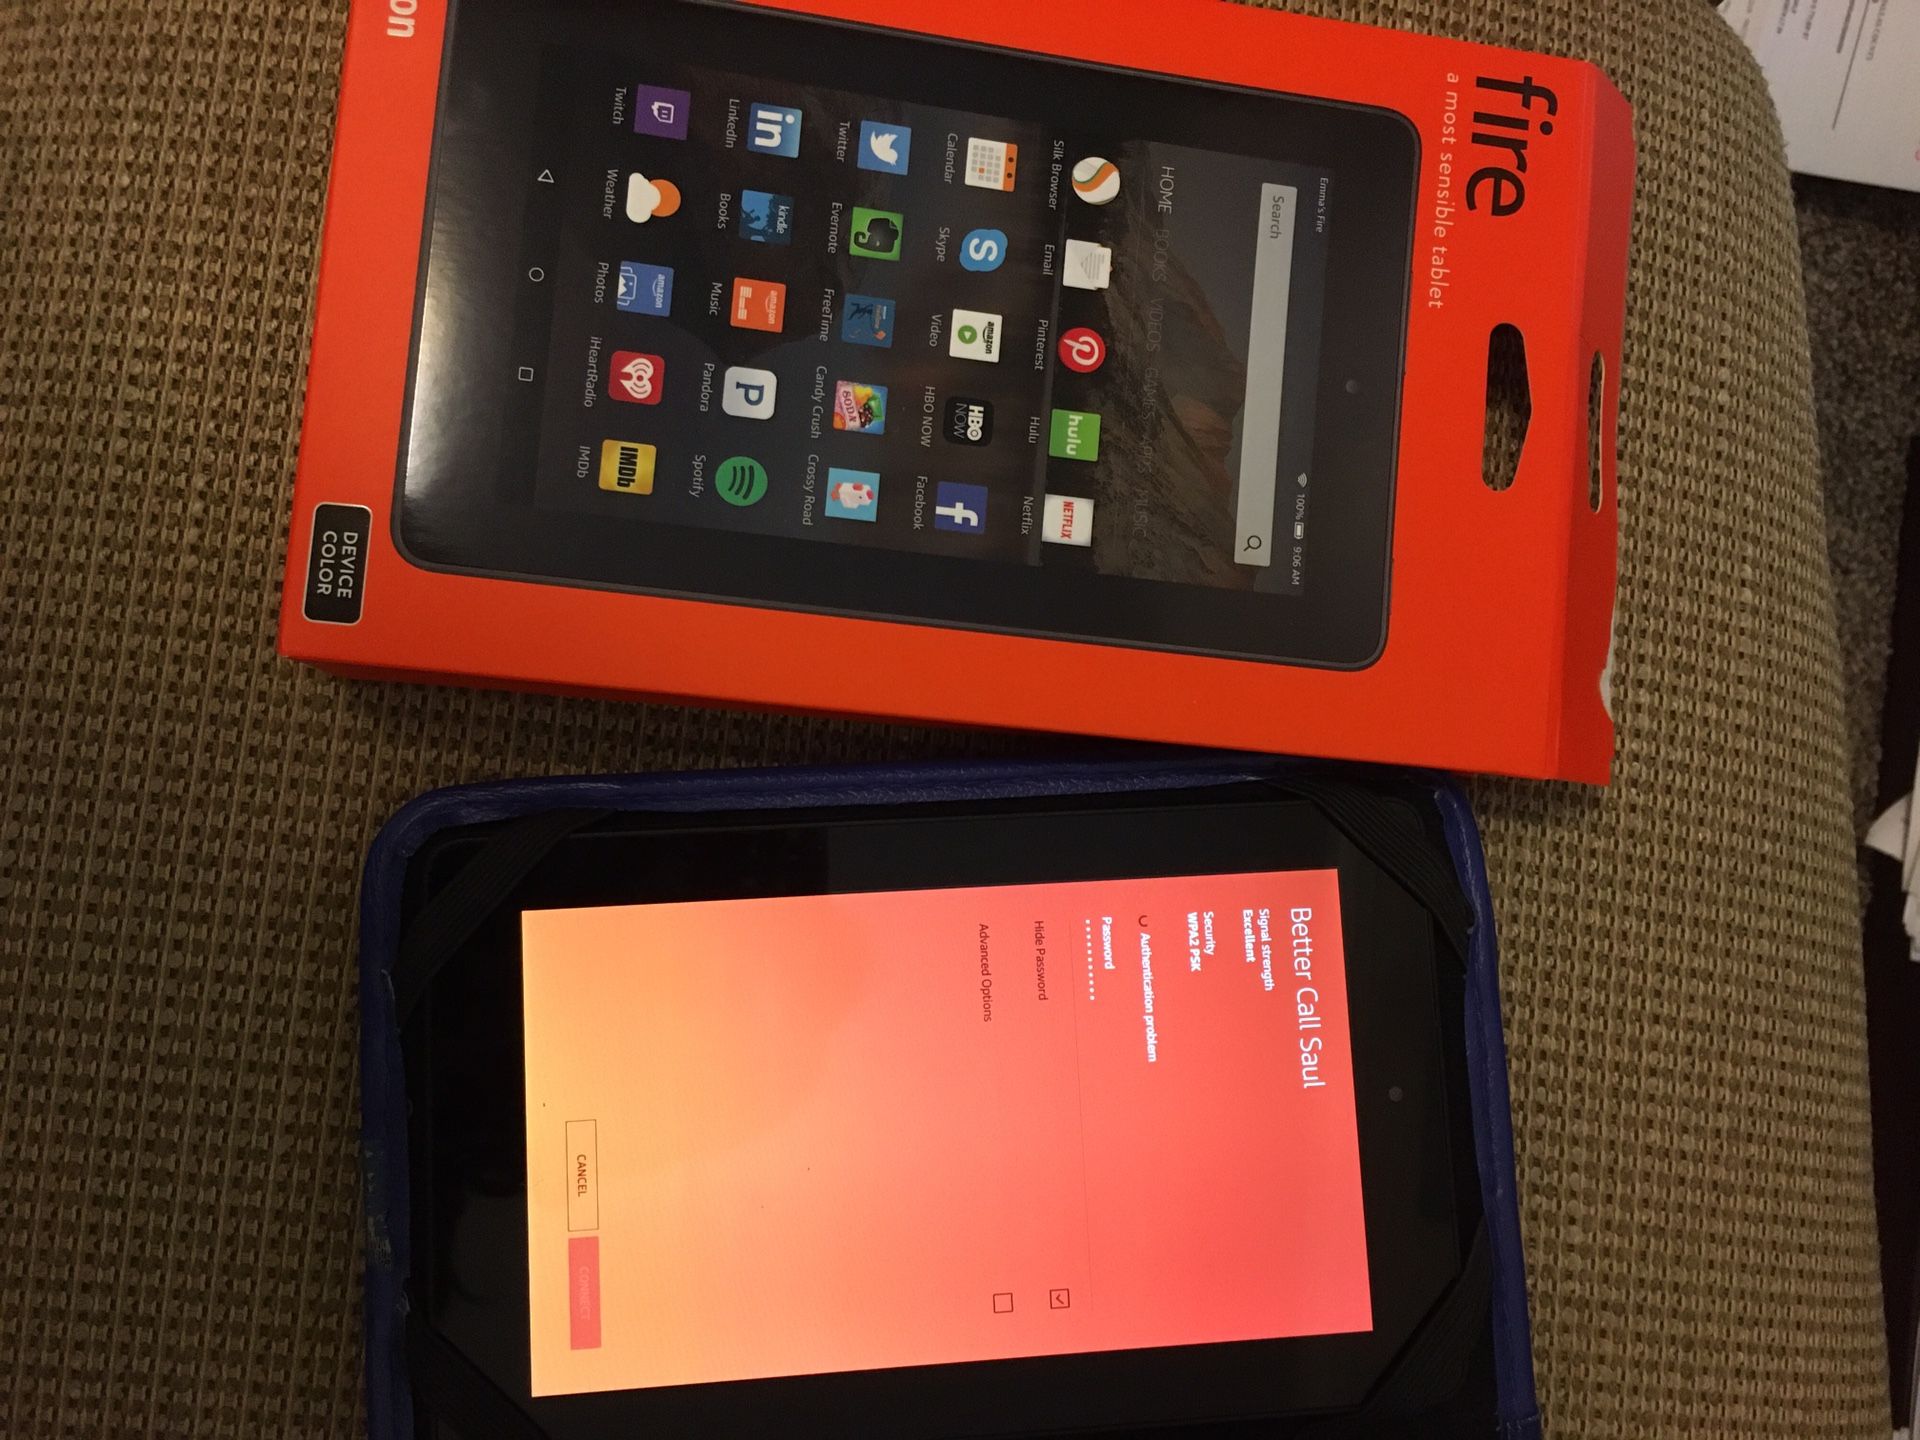 Amazon fire tablet 7 black like new